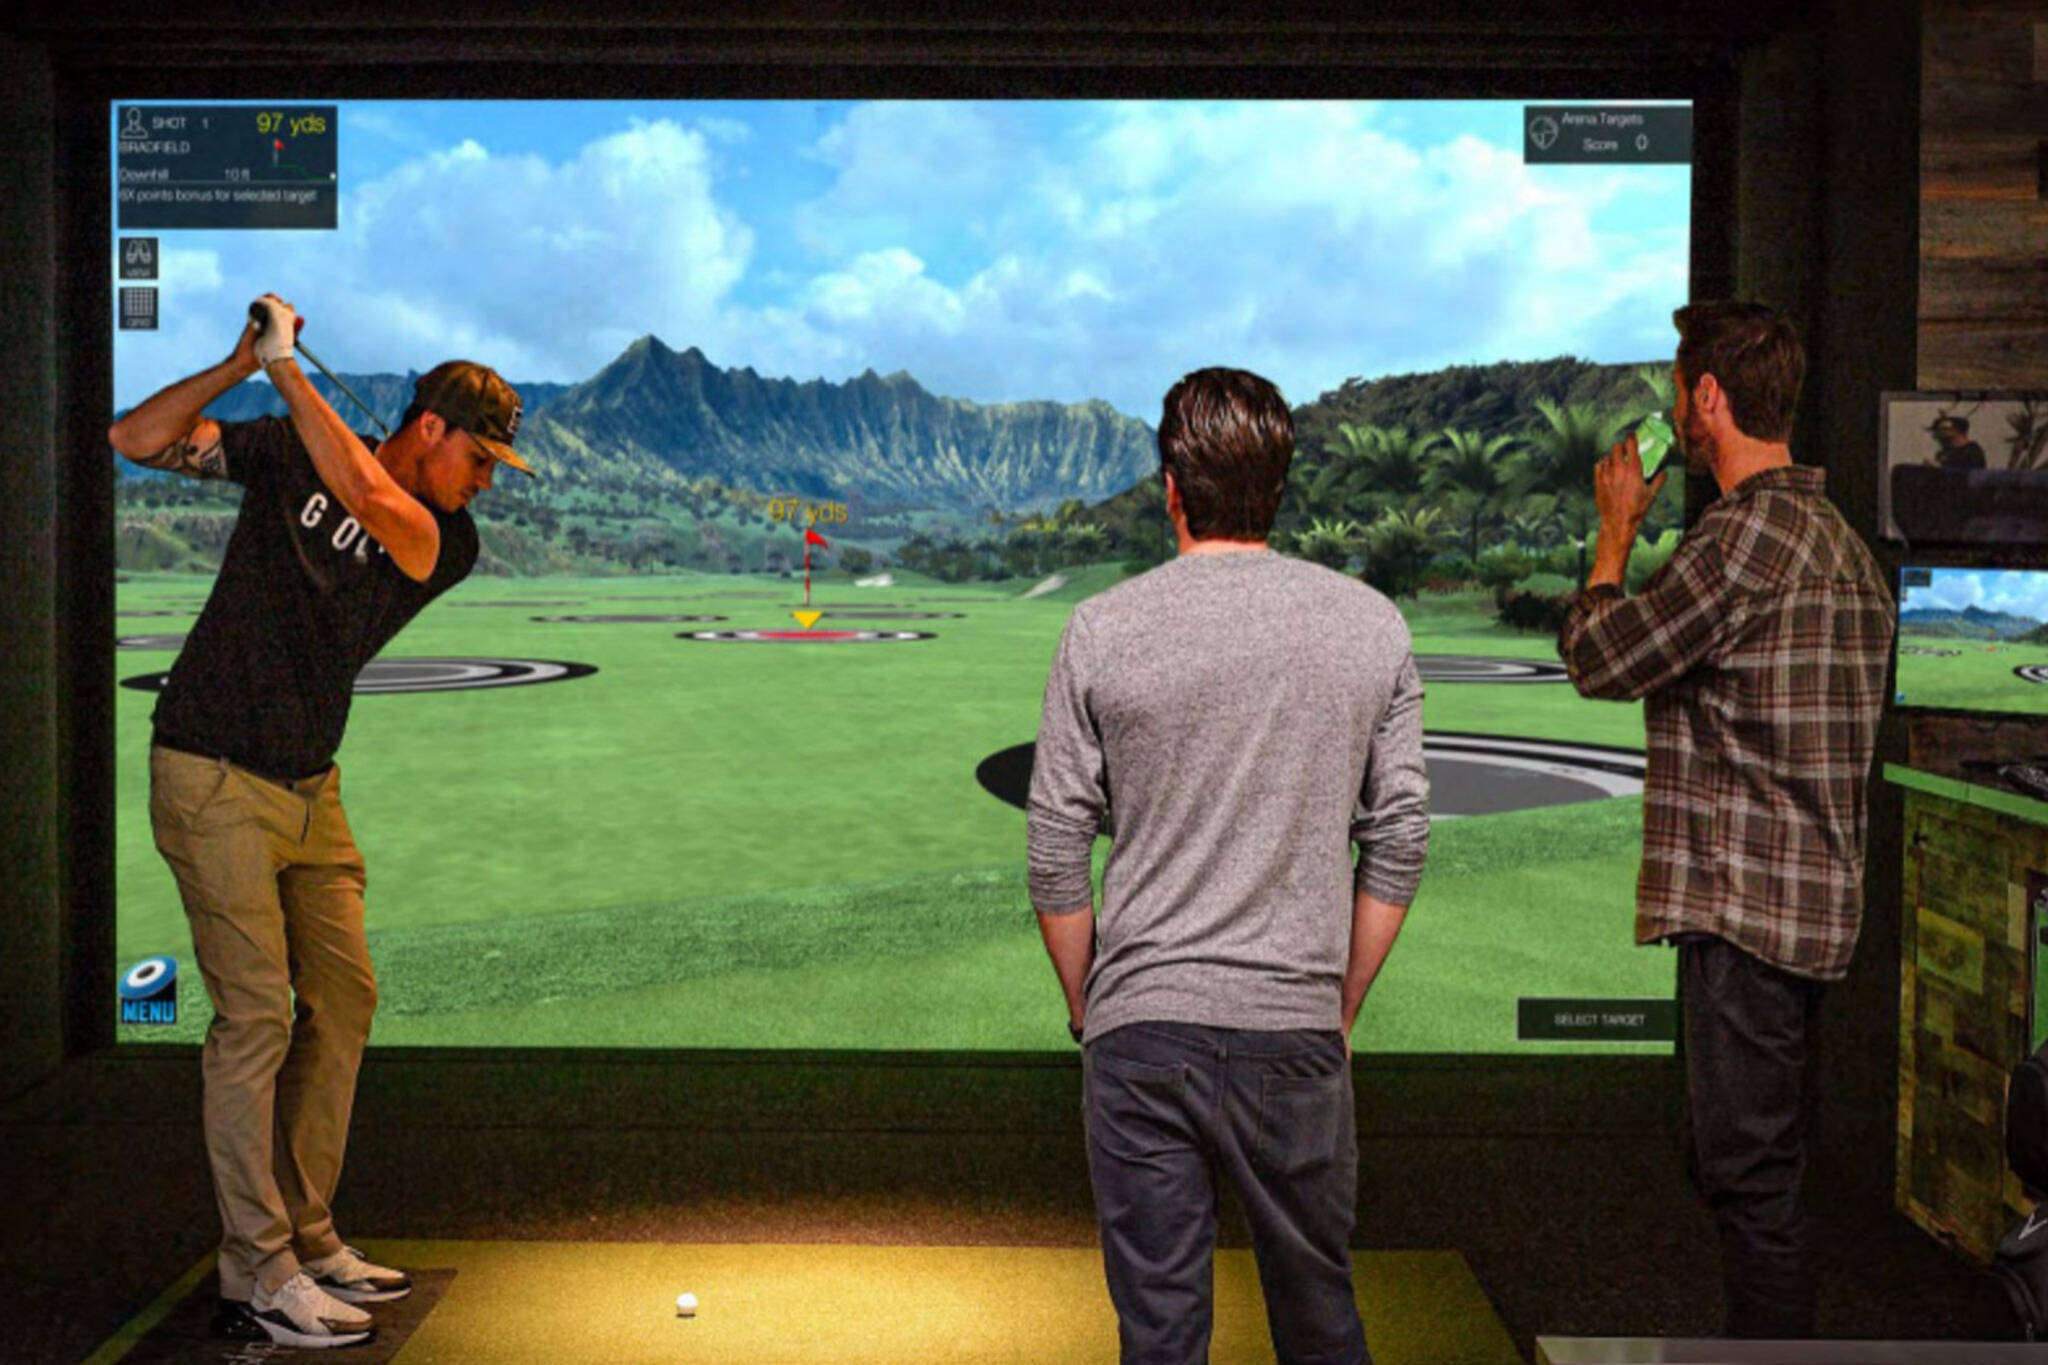 Indoor Golf Range, Golf Simulator Toronto